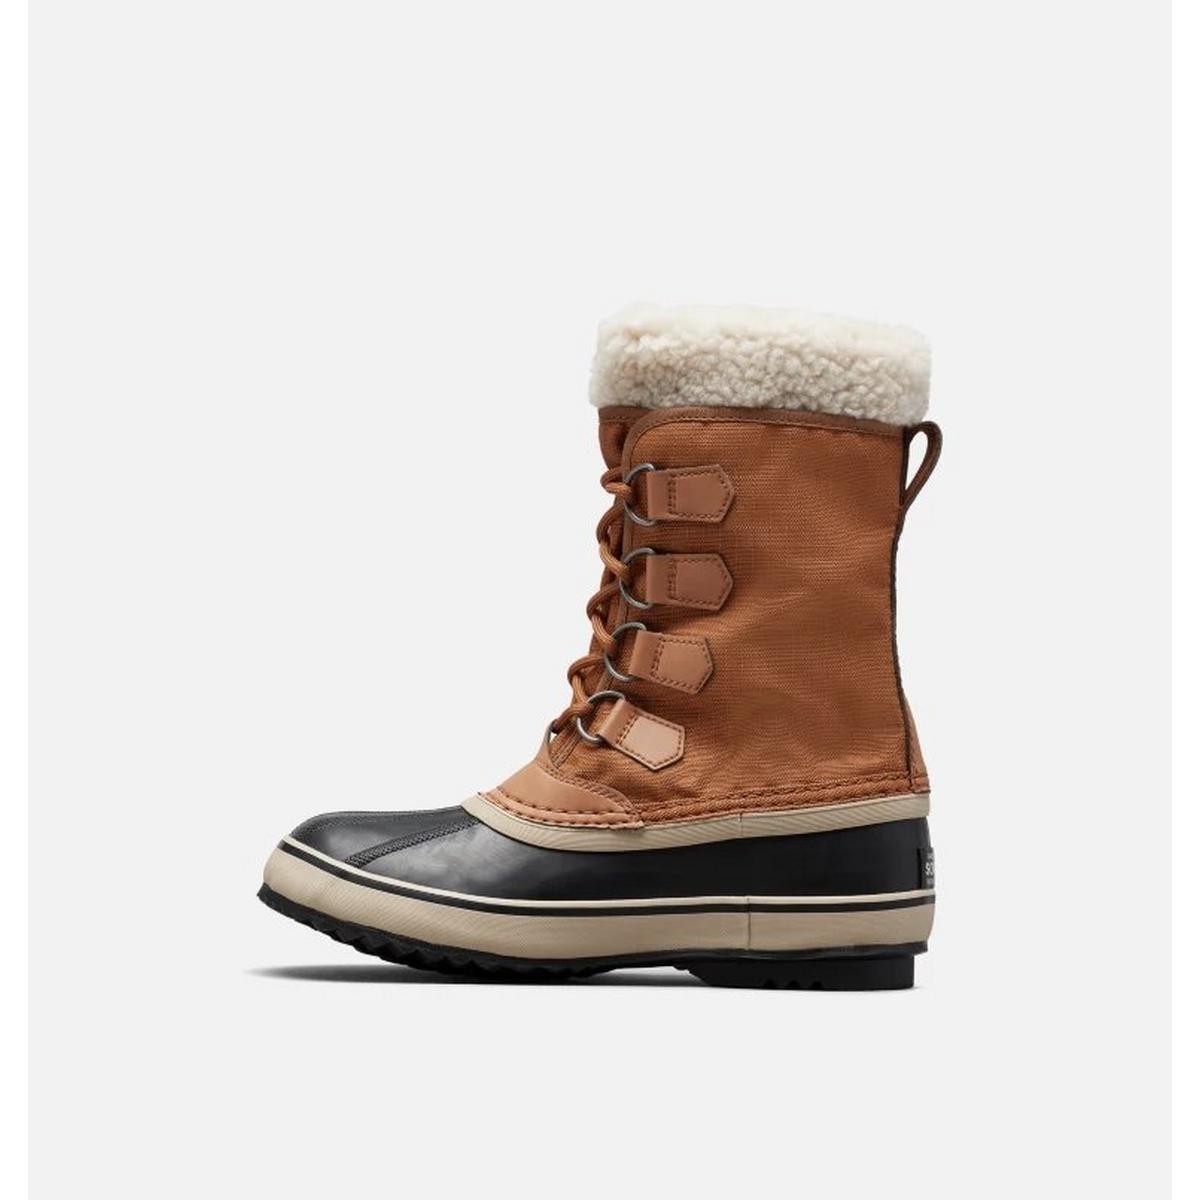 Sorel Winter Carnival Boots - Brown